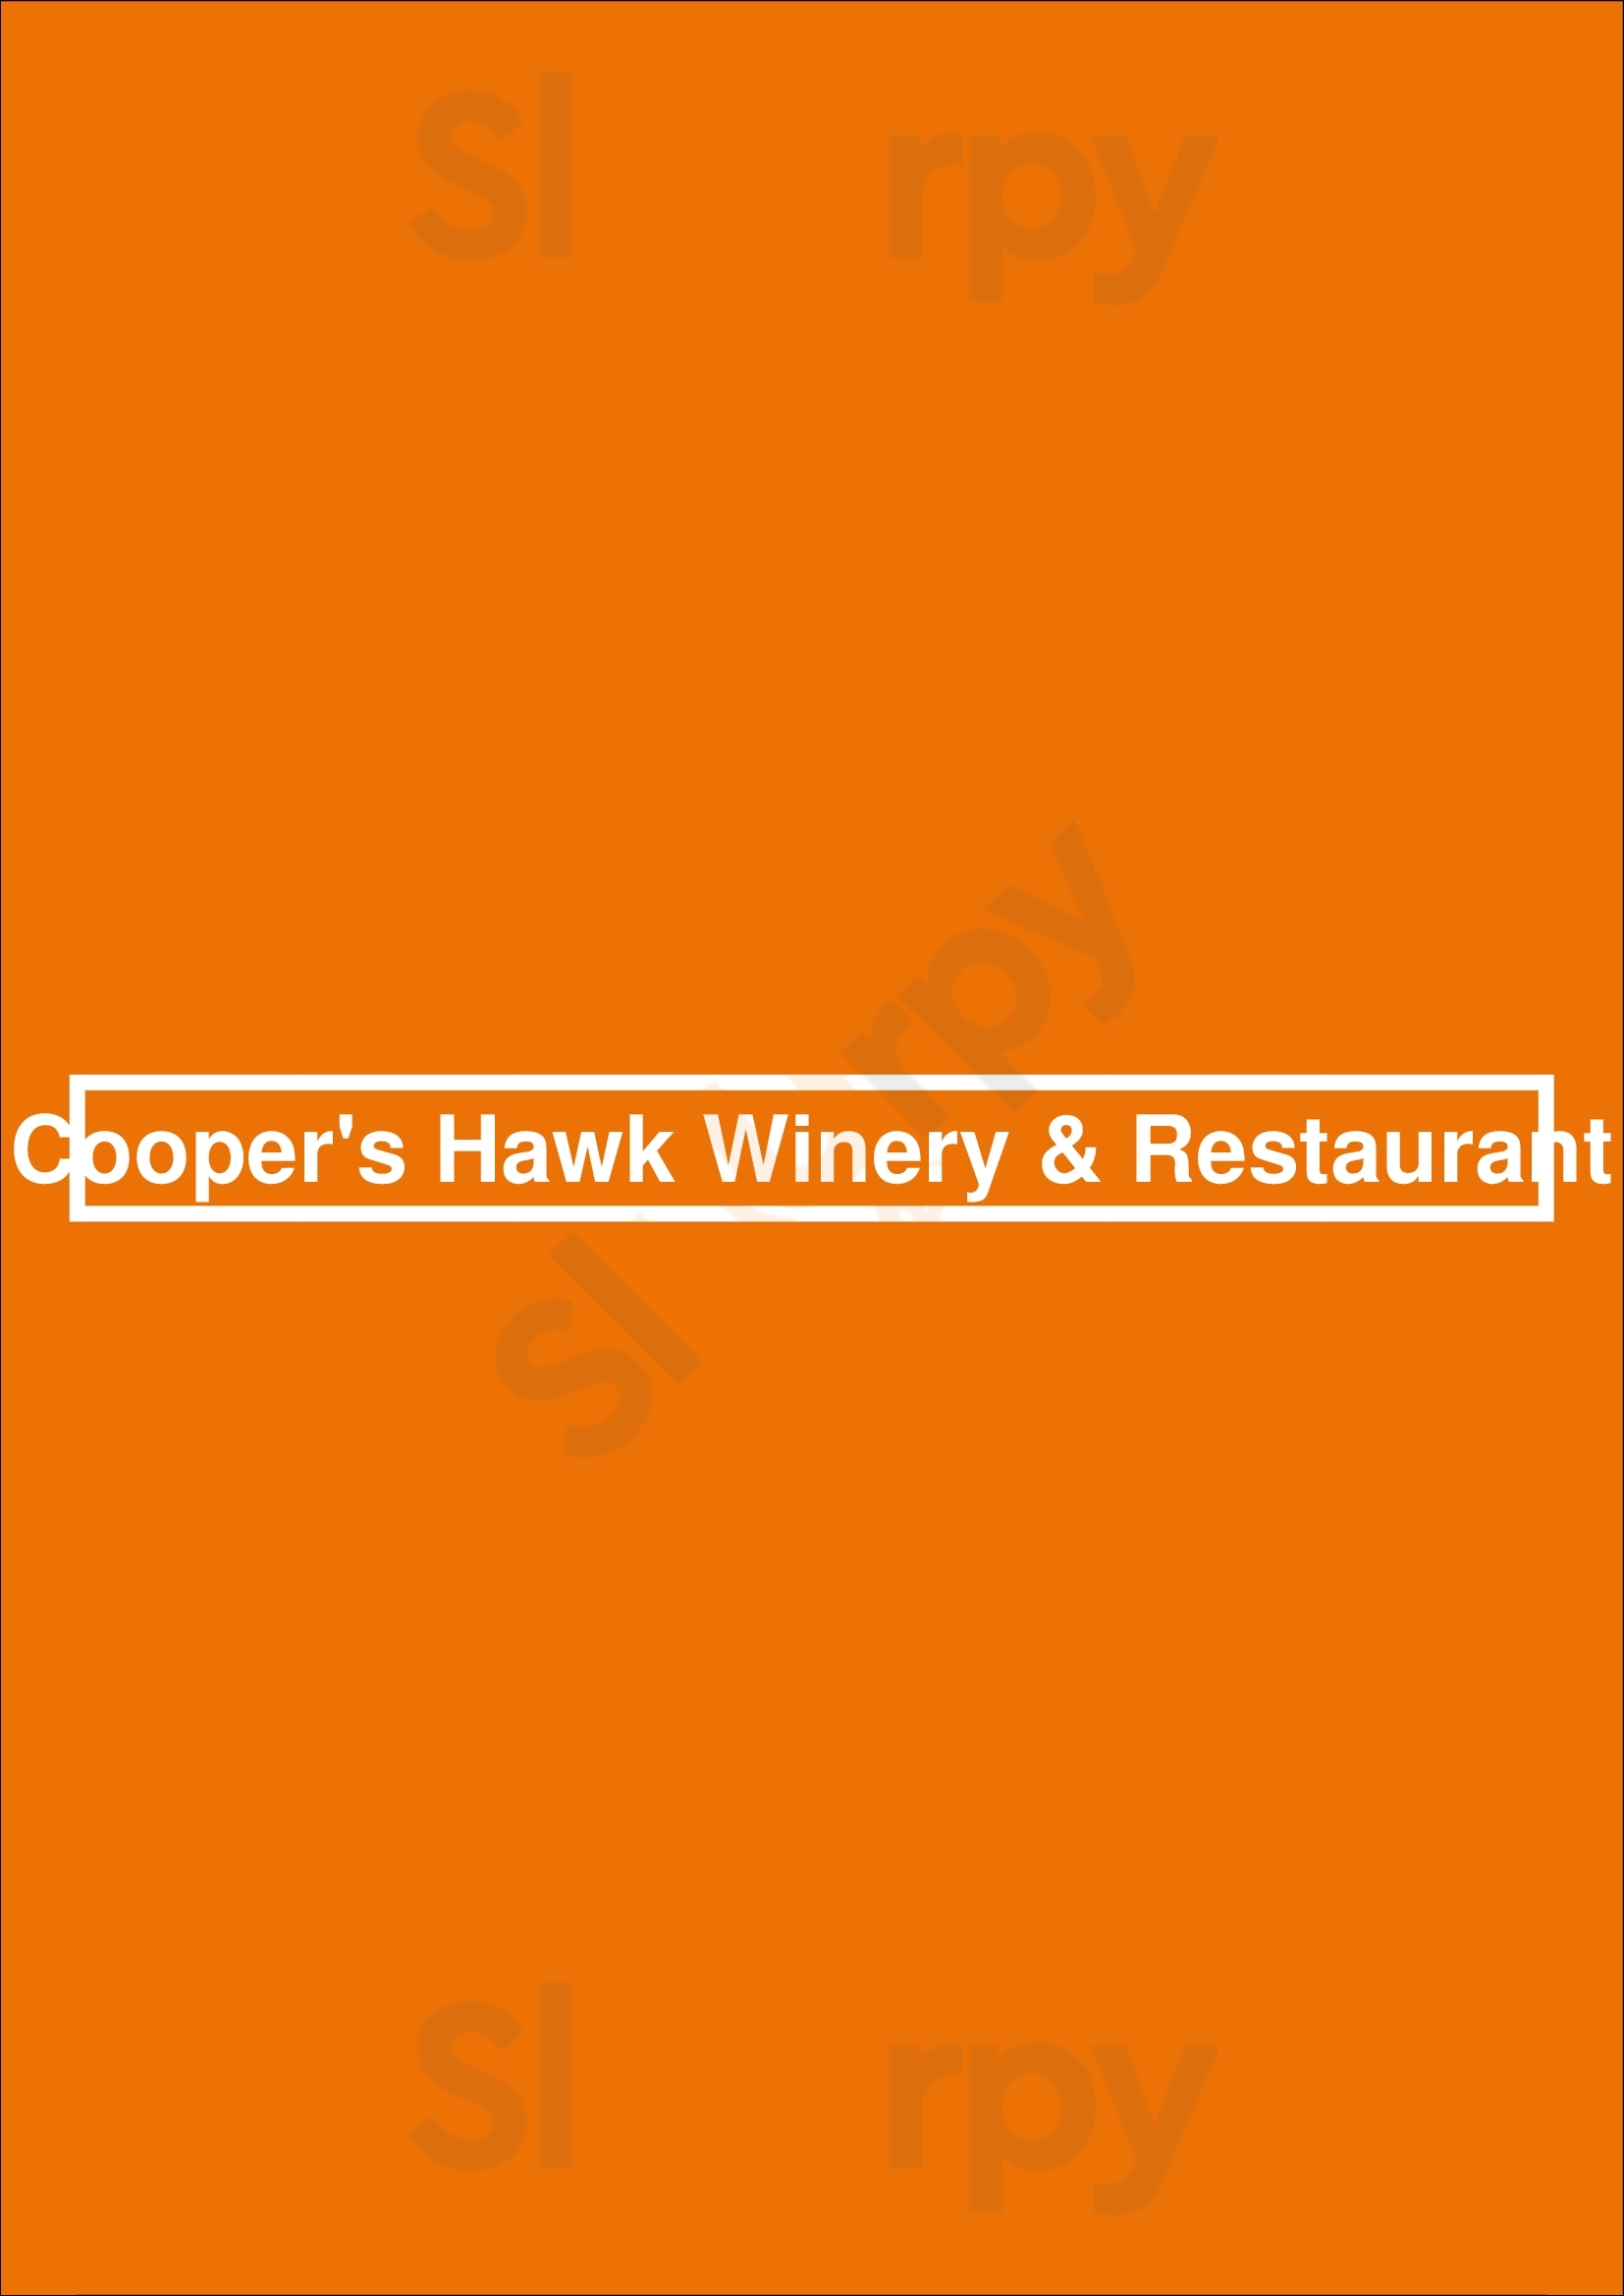 Cooper's Hawk Winery & Restaurant- Springfield Springfield Menu - 1